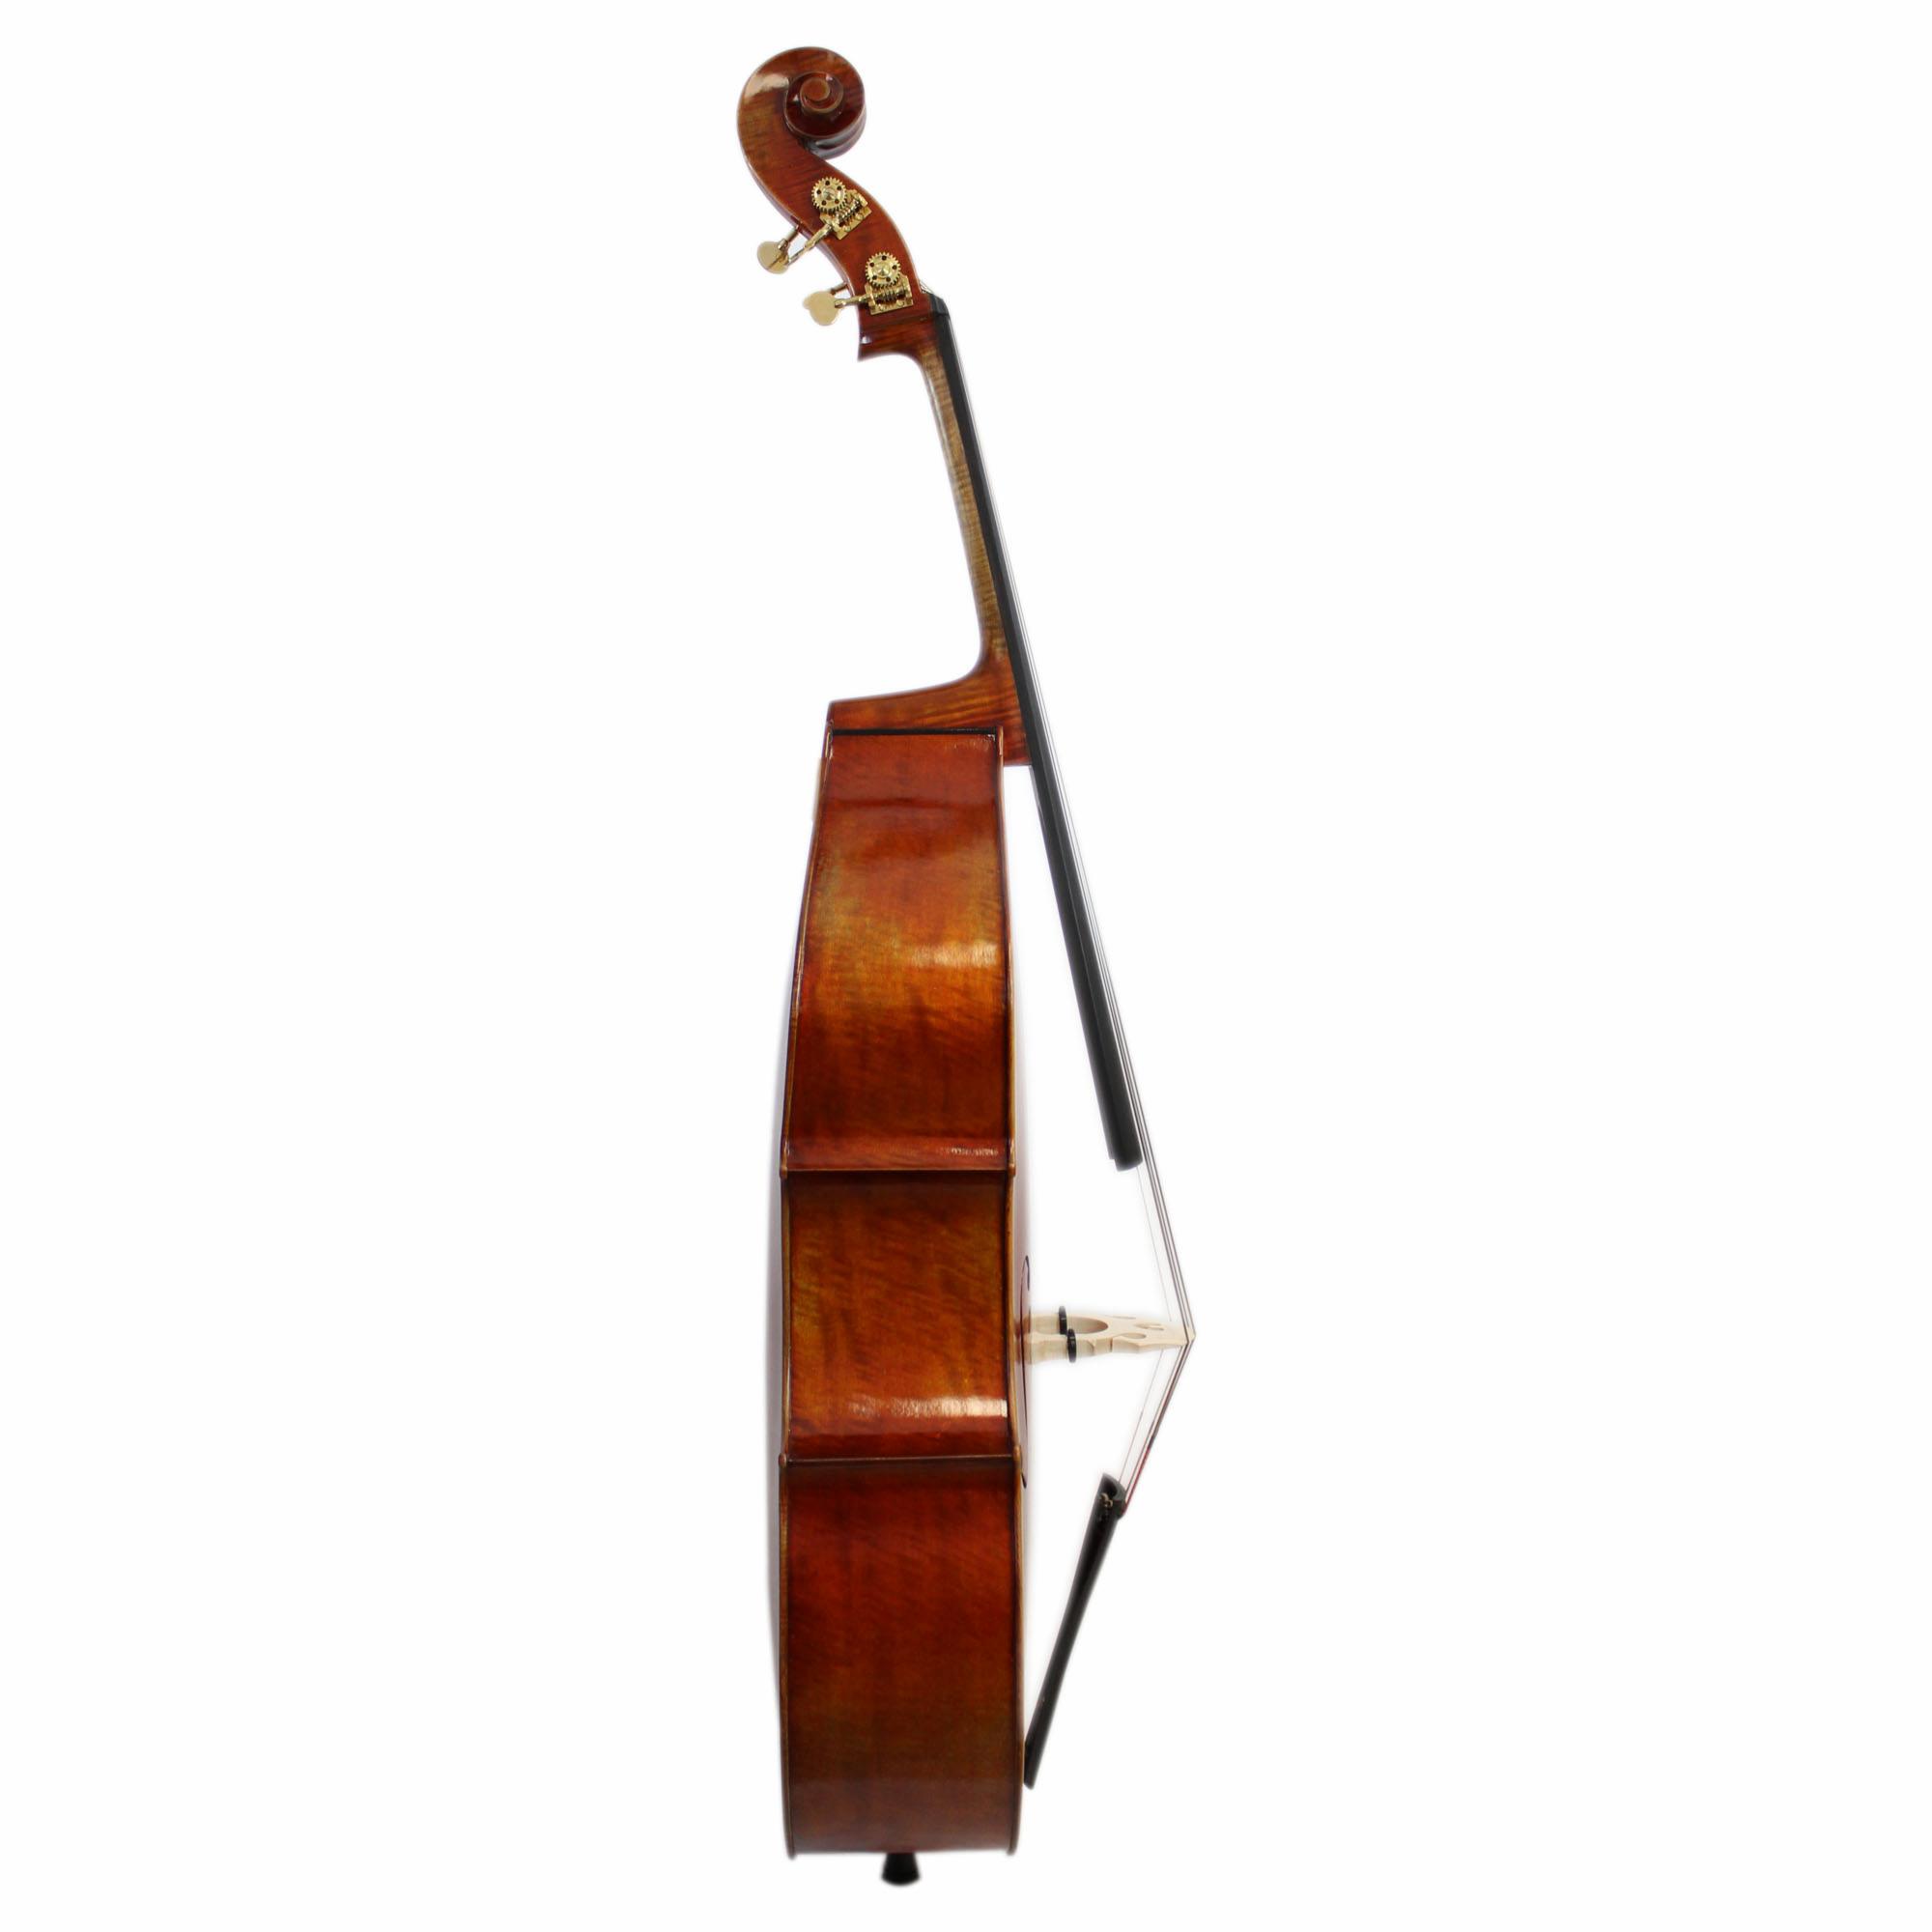 Yuan Qin Maestro Bass